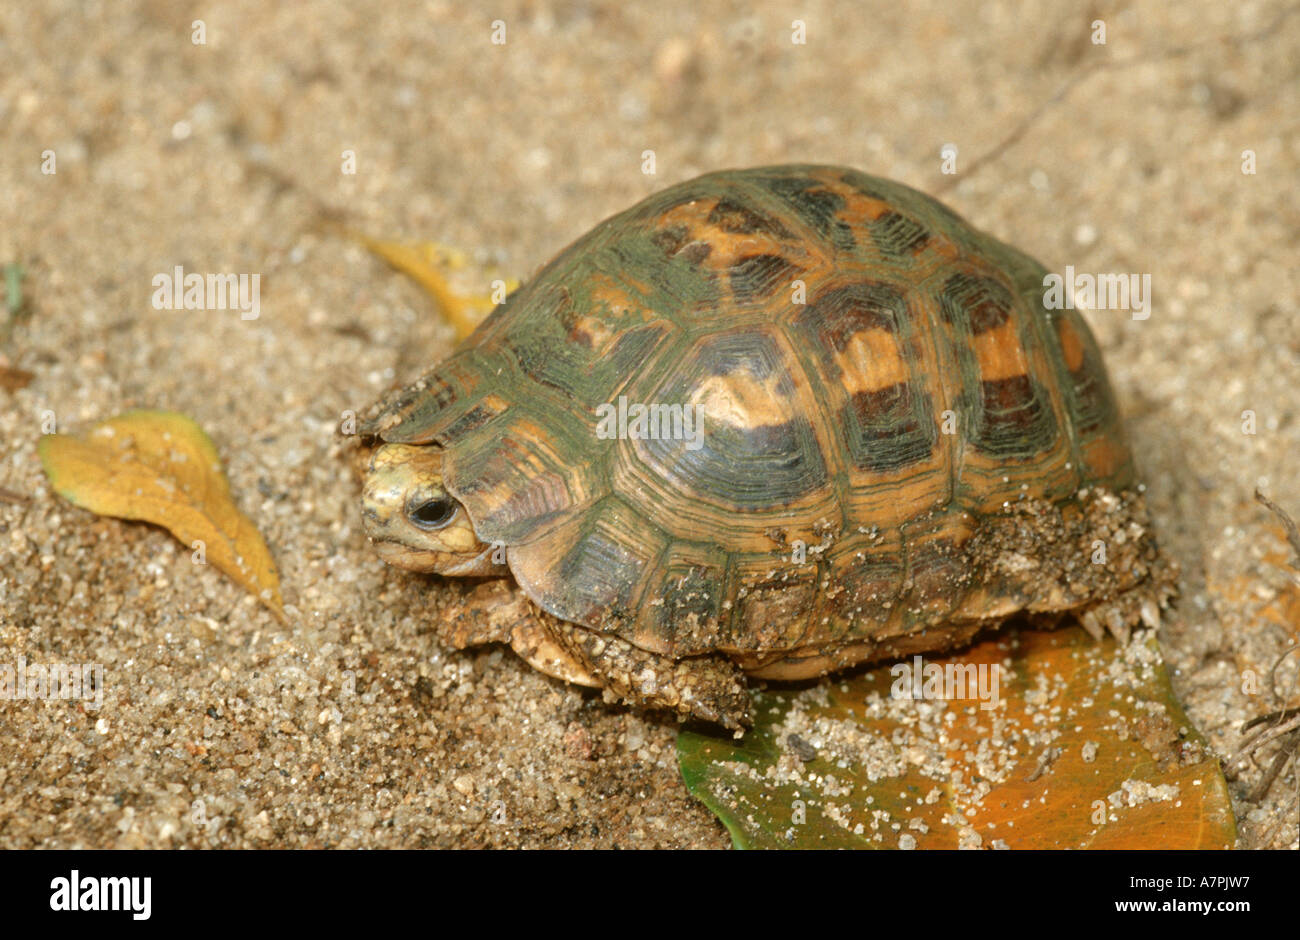 spider tortoise, Madagascan spider tortoise (Pyxis arachnoides arachnoides), in sand, Madagascar Stock Photo